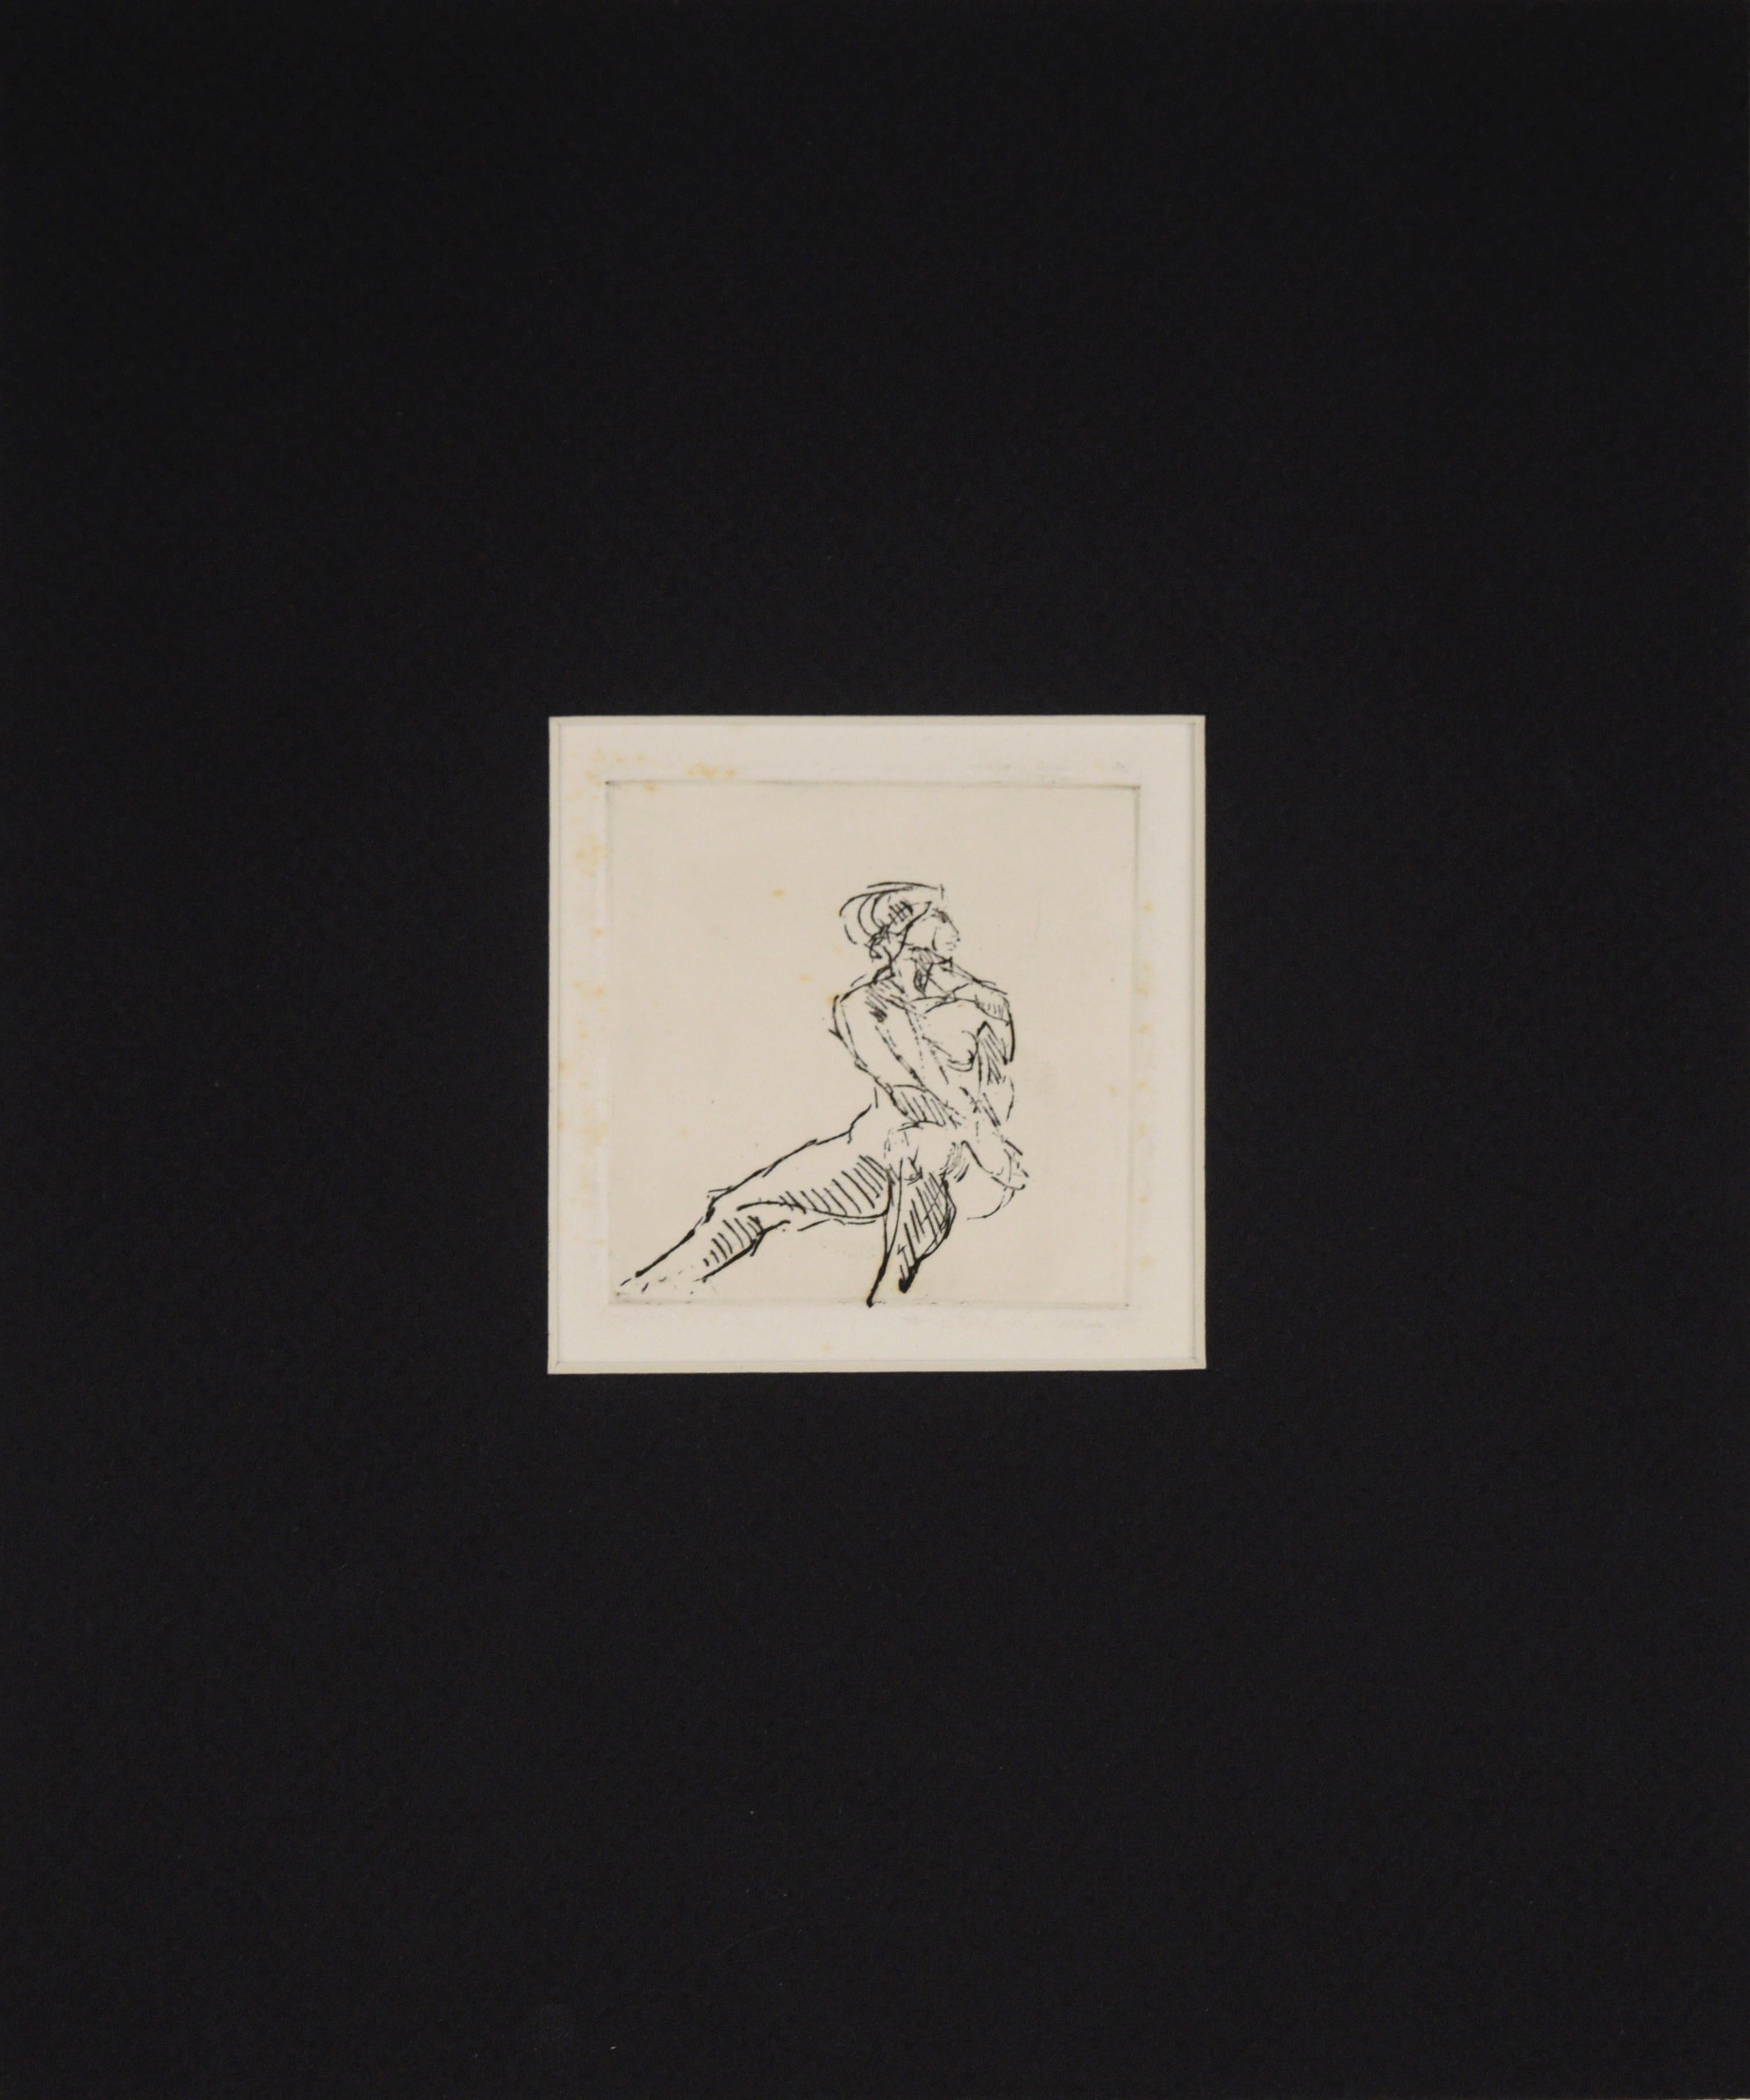 Jim Smyth Figurative Print - Male Figurative Study - Original Lithograph on Paper